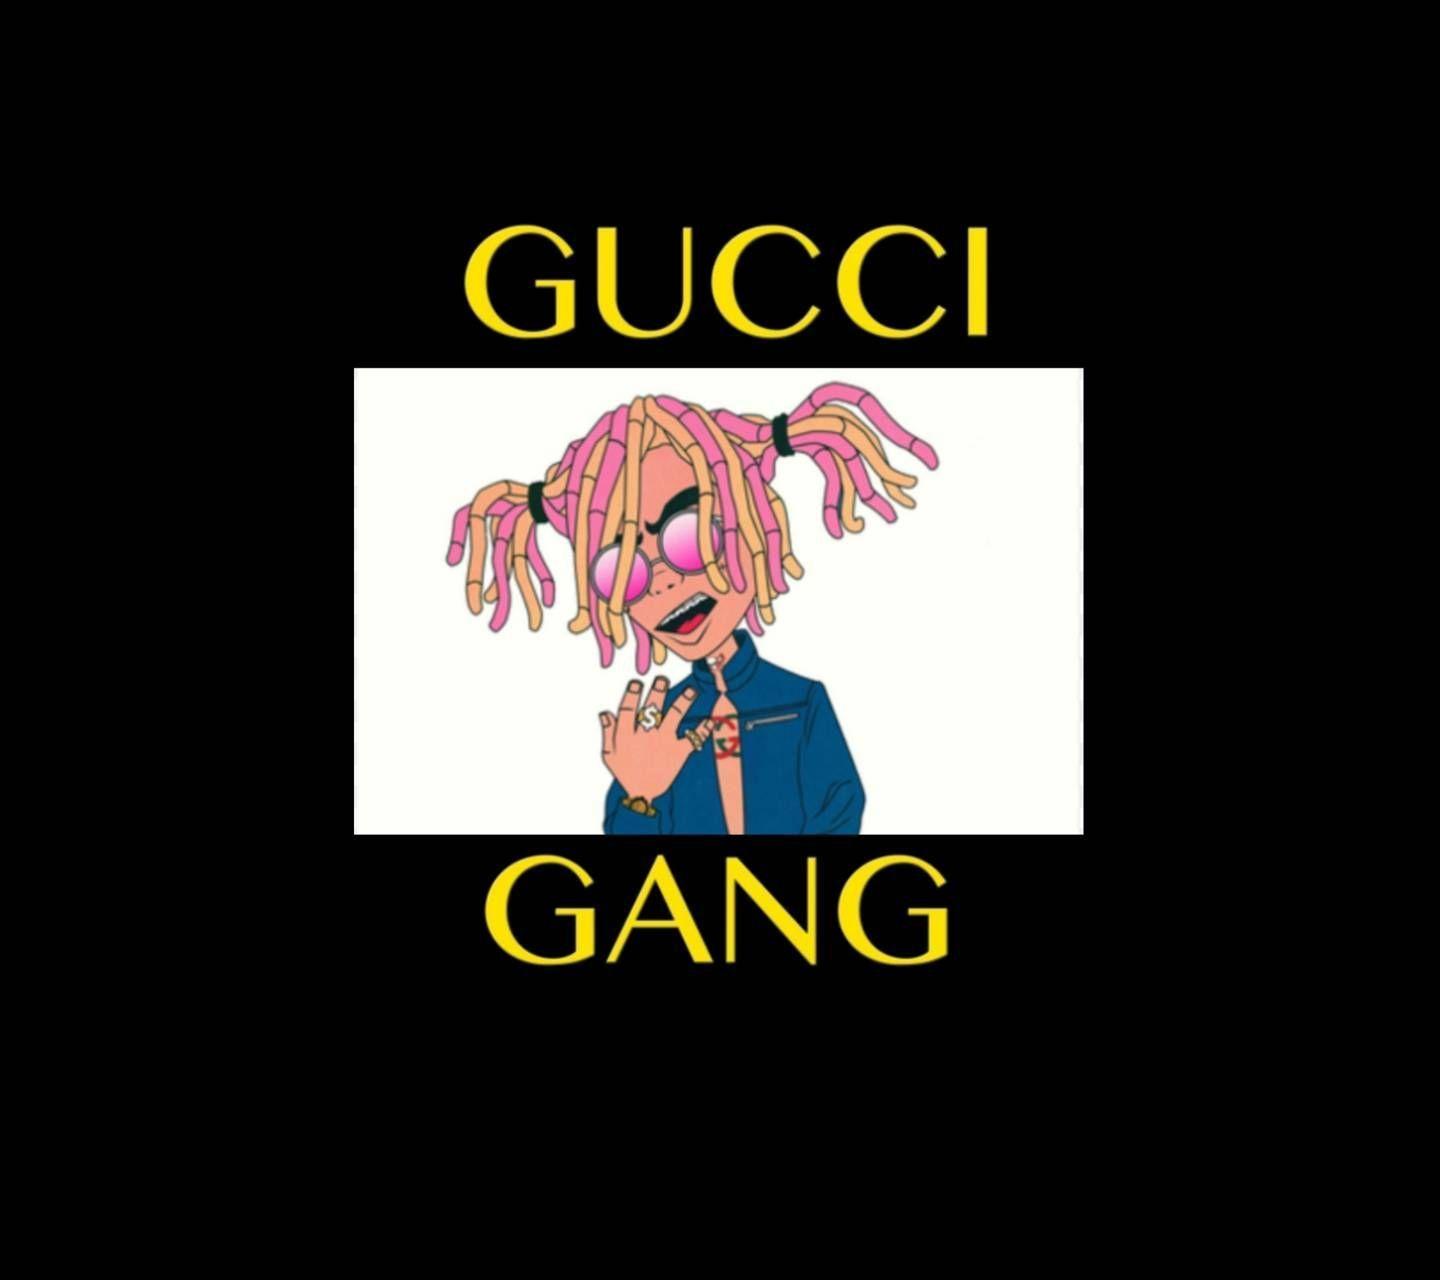 Gucci E Gang Cartoon Wallpaper Free Gucci E Gang Cartoon